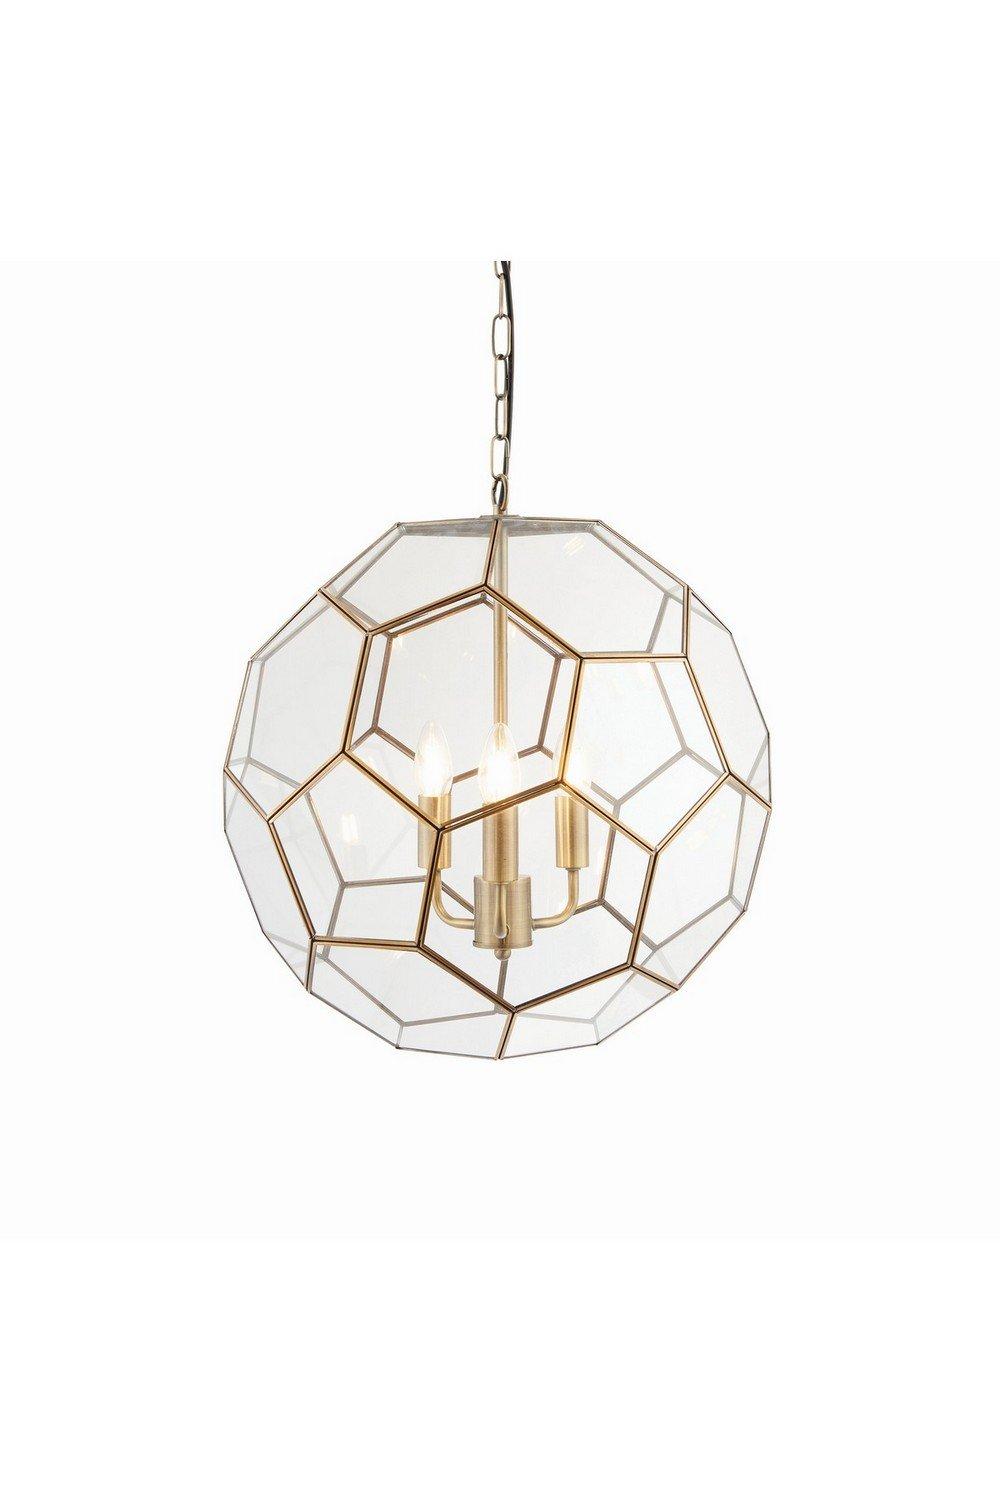 Miele 3 Light Spherical Pendant Antique Brass Glass E14